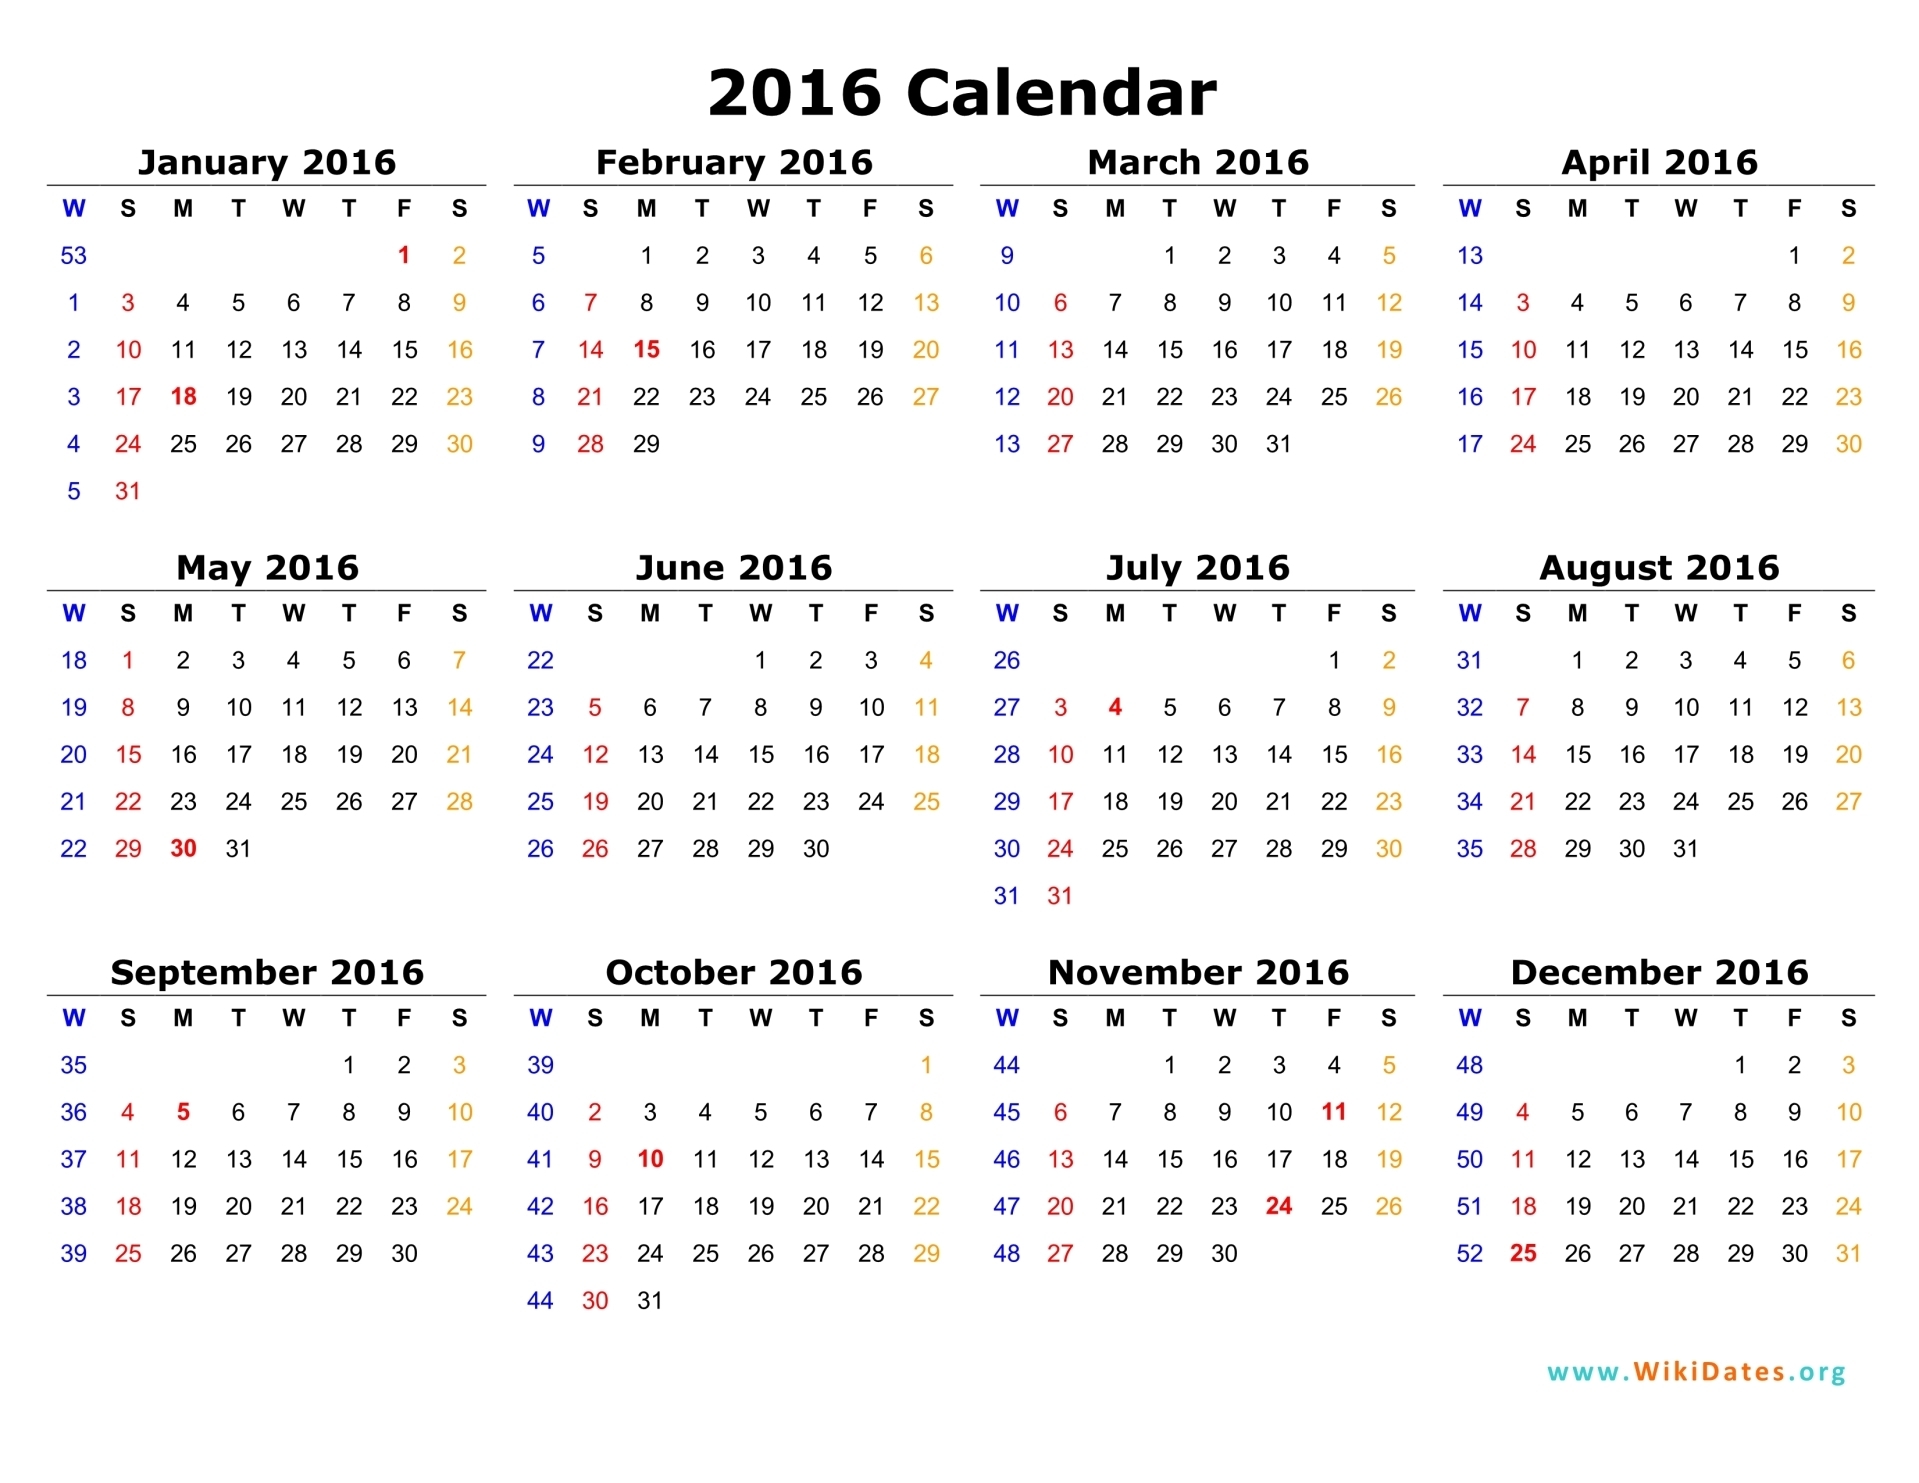 free download 2016 calendar with holidays get calendar printable 2016 calendar 1919x1483 for your desktop mobile tablet explore 48 free wallpaper calendars for 2016 free desktop calendar wallpaper 2016 free desktop wallpaper 2016 2016